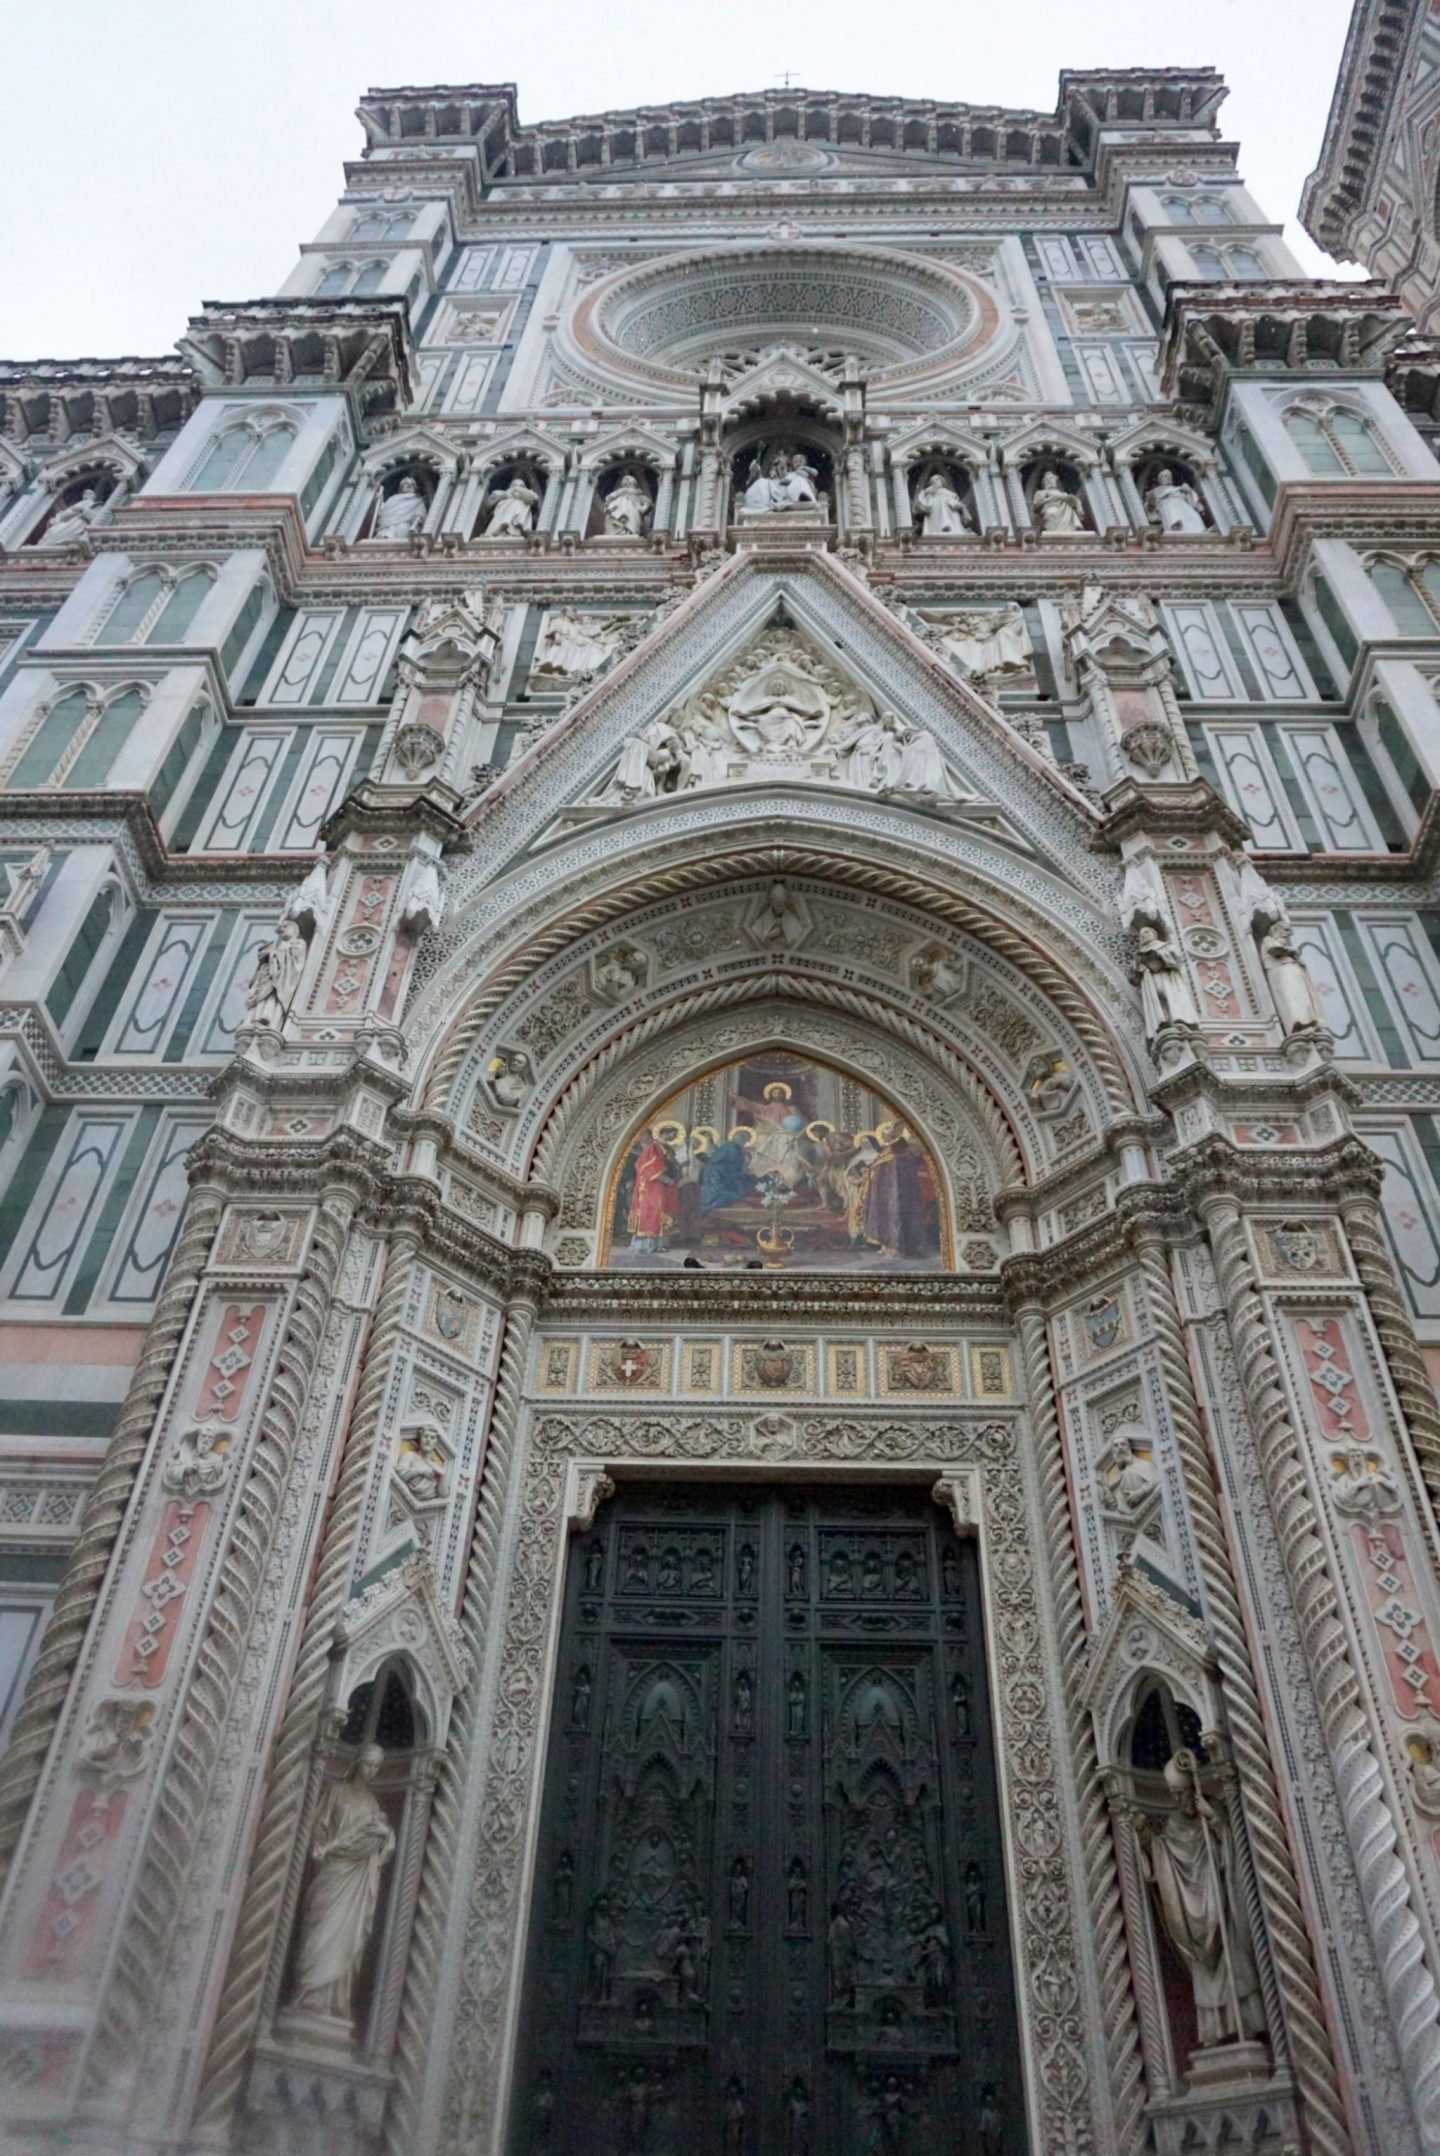 Visiting the Duomo Florence www.extraordianrychoas.com